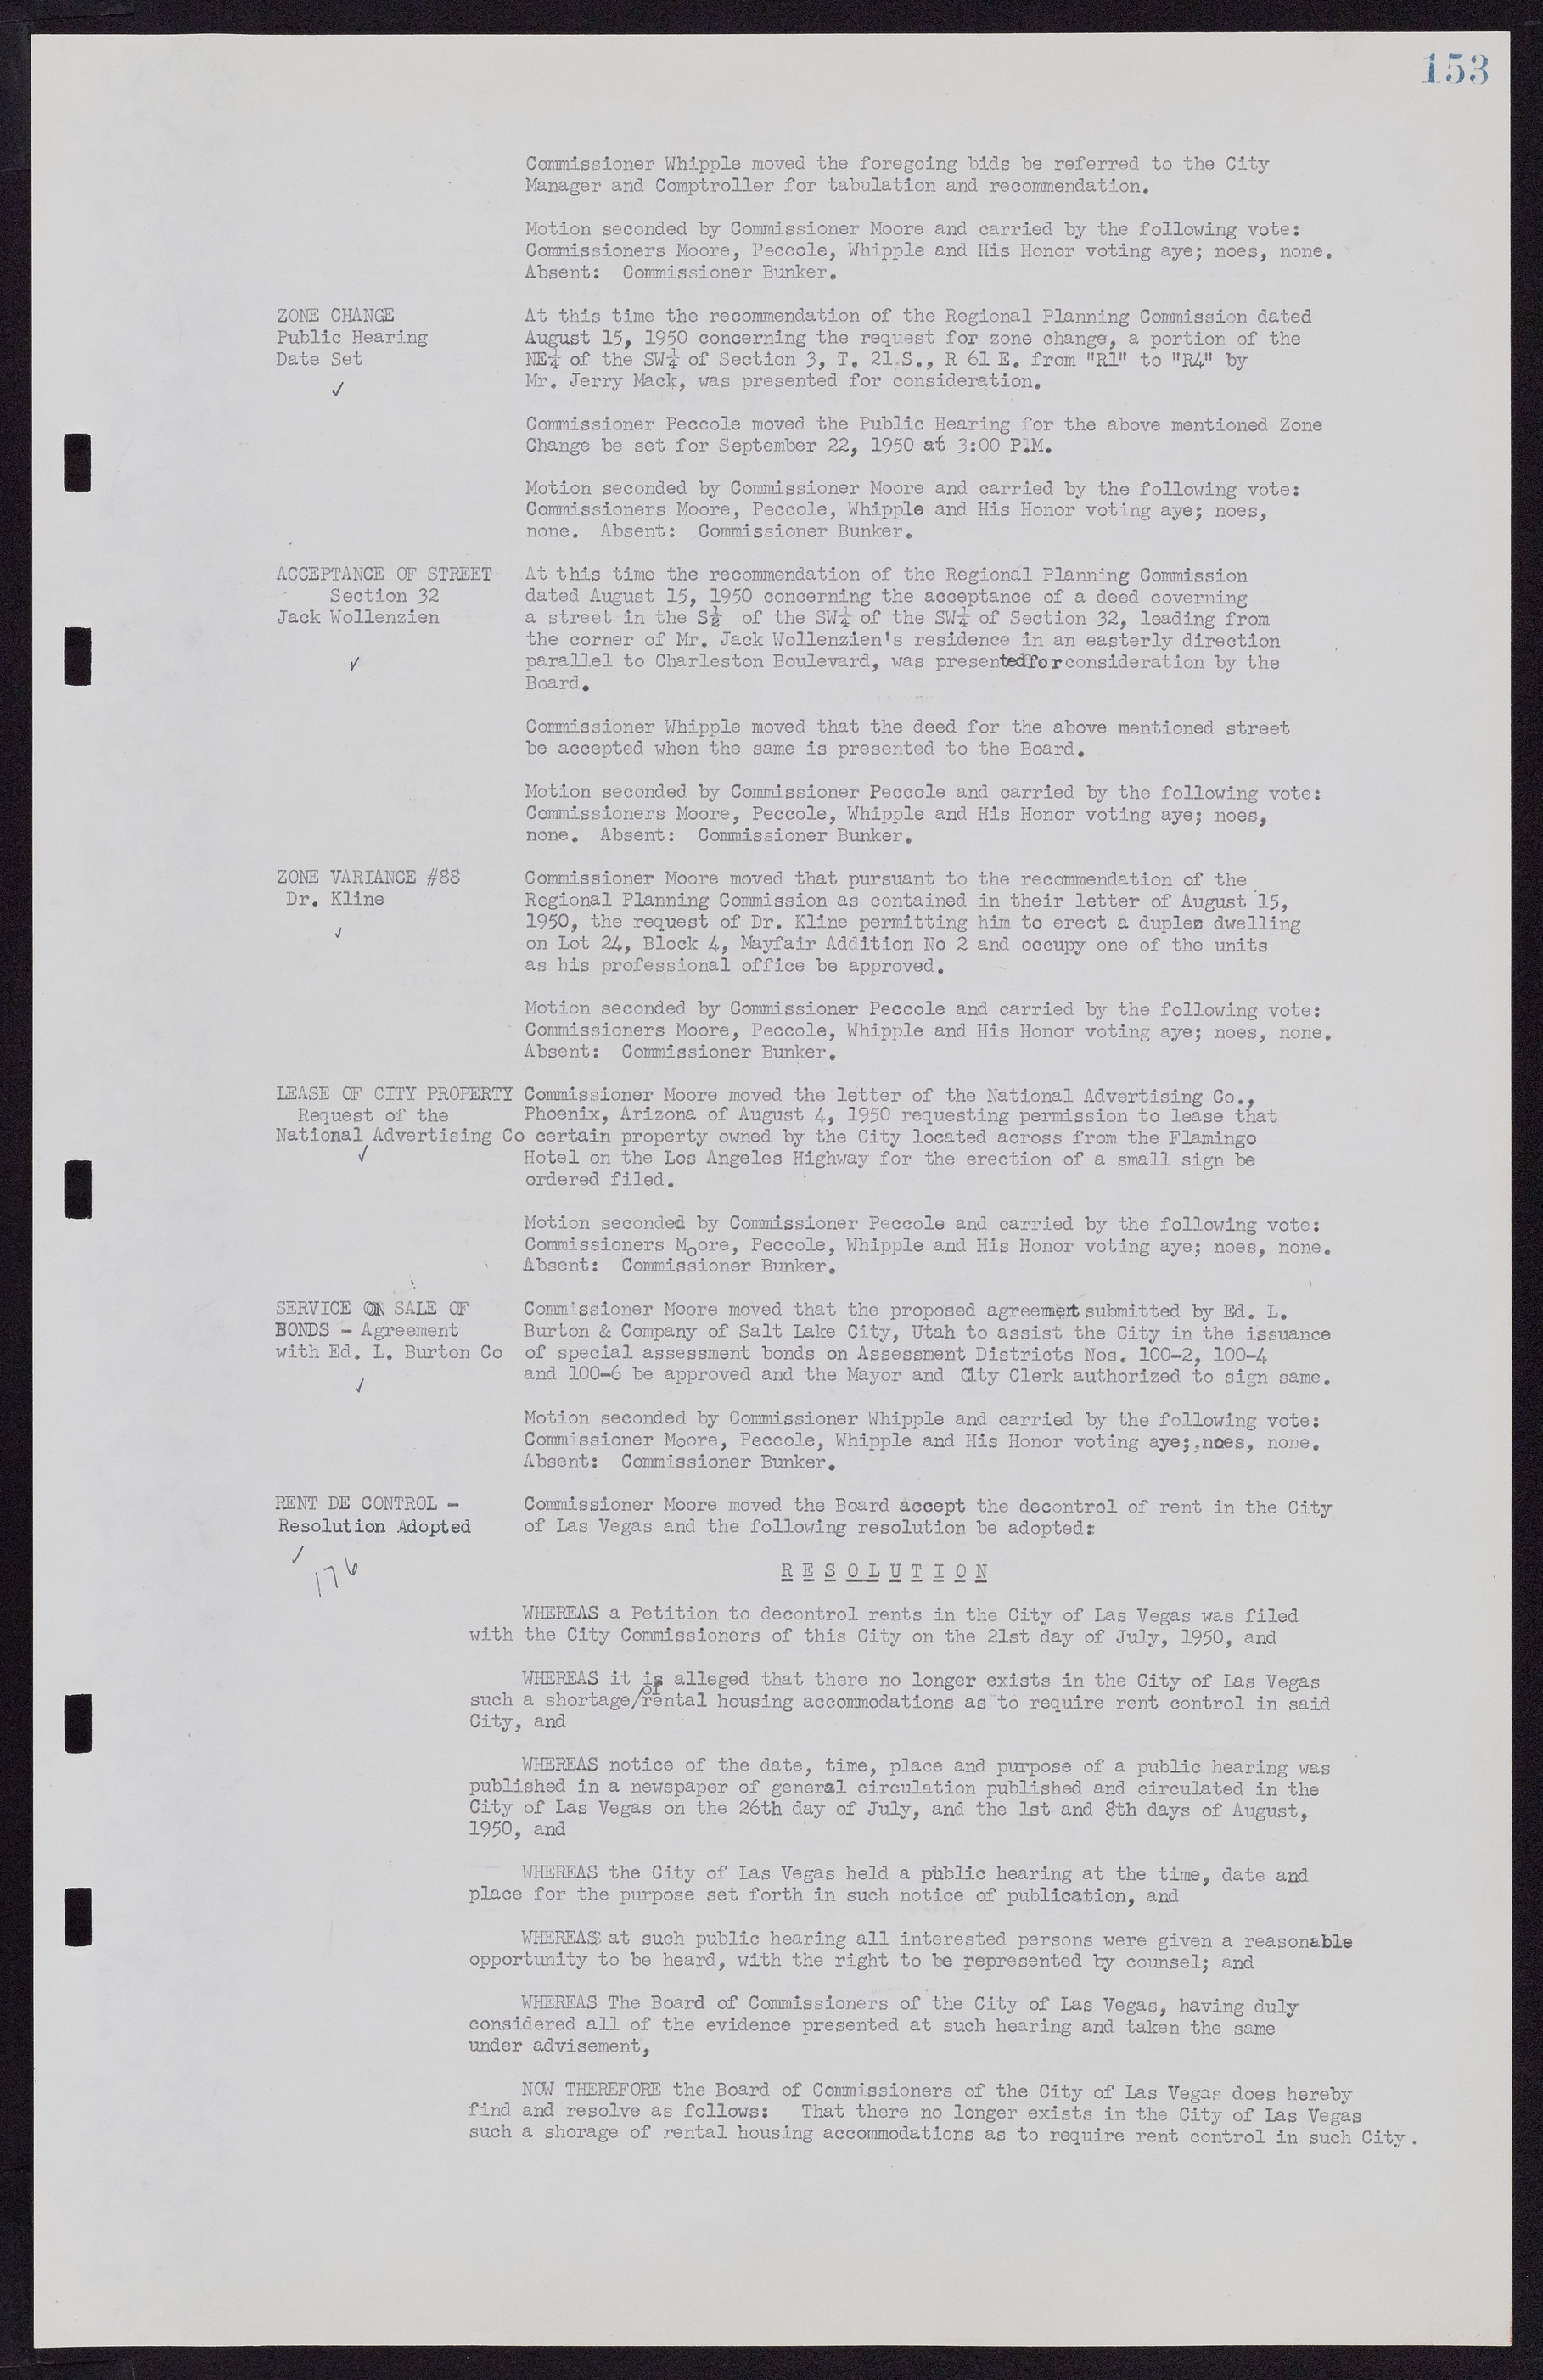 Las Vegas City Commission Minutes, November 7, 1949 to May 21, 1952, lvc000007-163